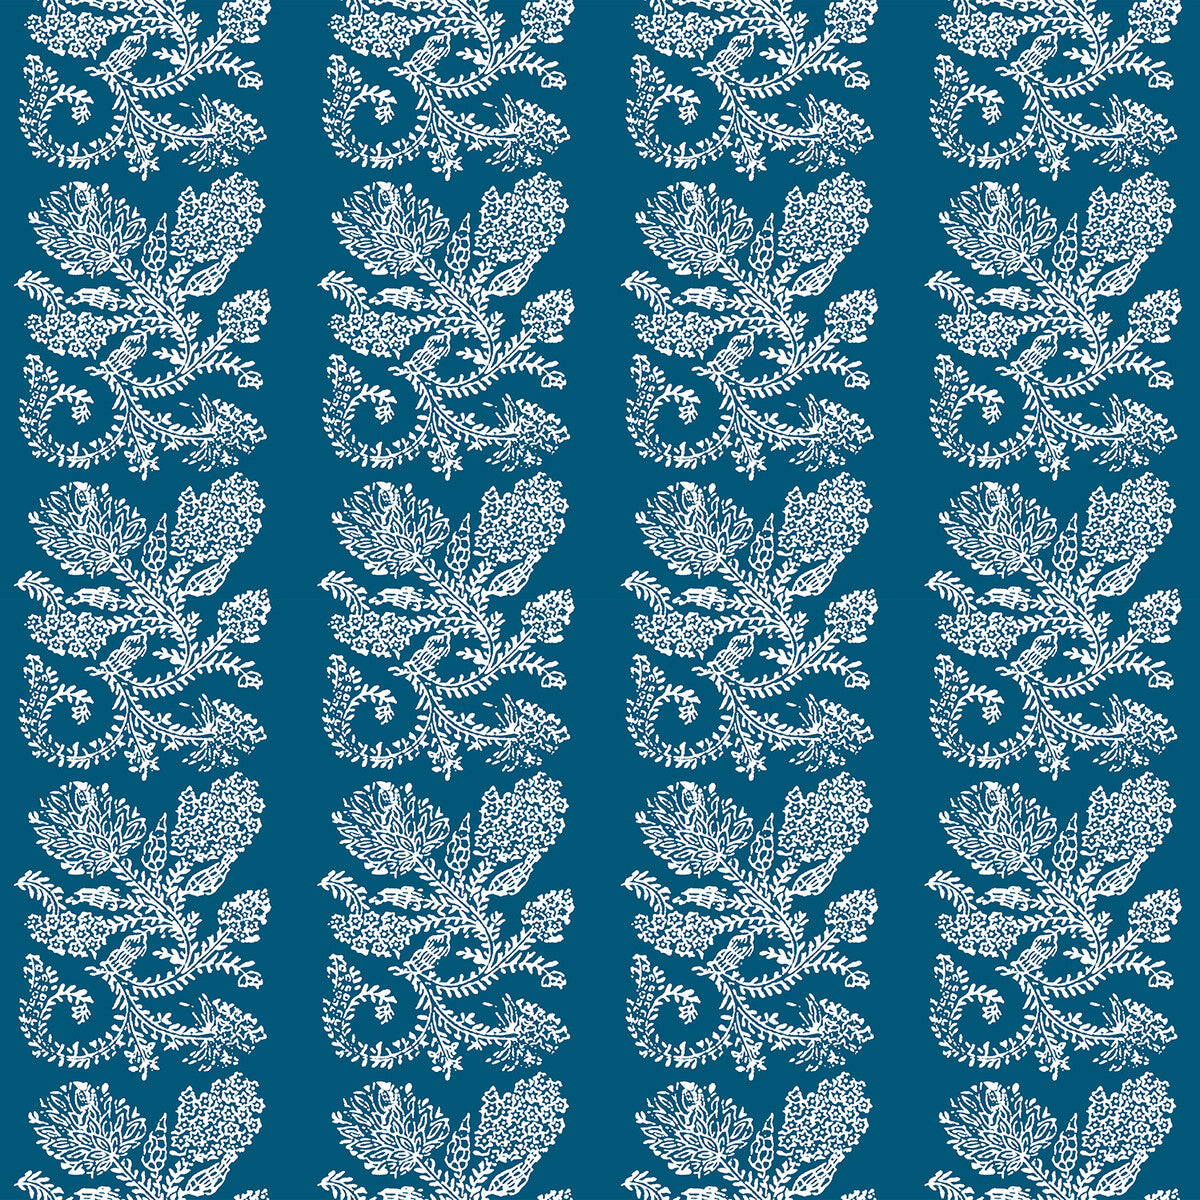 Camino fabric in azul color - pattern LCT1026.002.0 - by Gaston y Daniela in the Lorenzo Castillo V collection